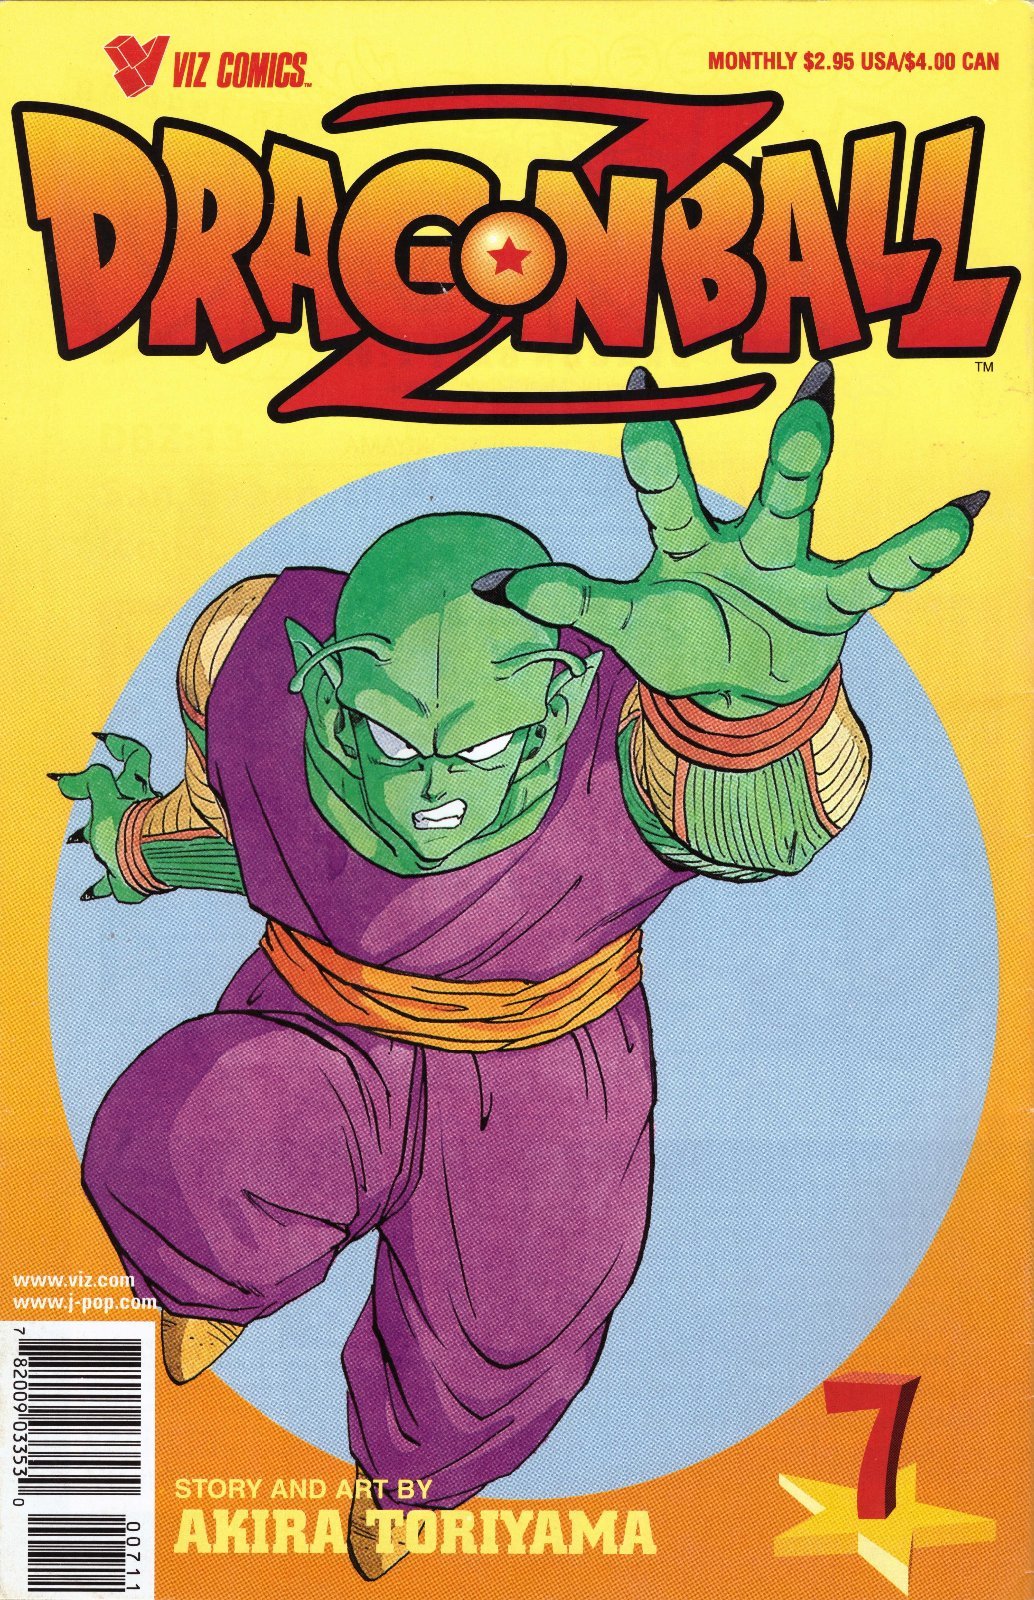 Dragon Ball Z Part 1 #7 Reprint (1998-1999) Viz Comics